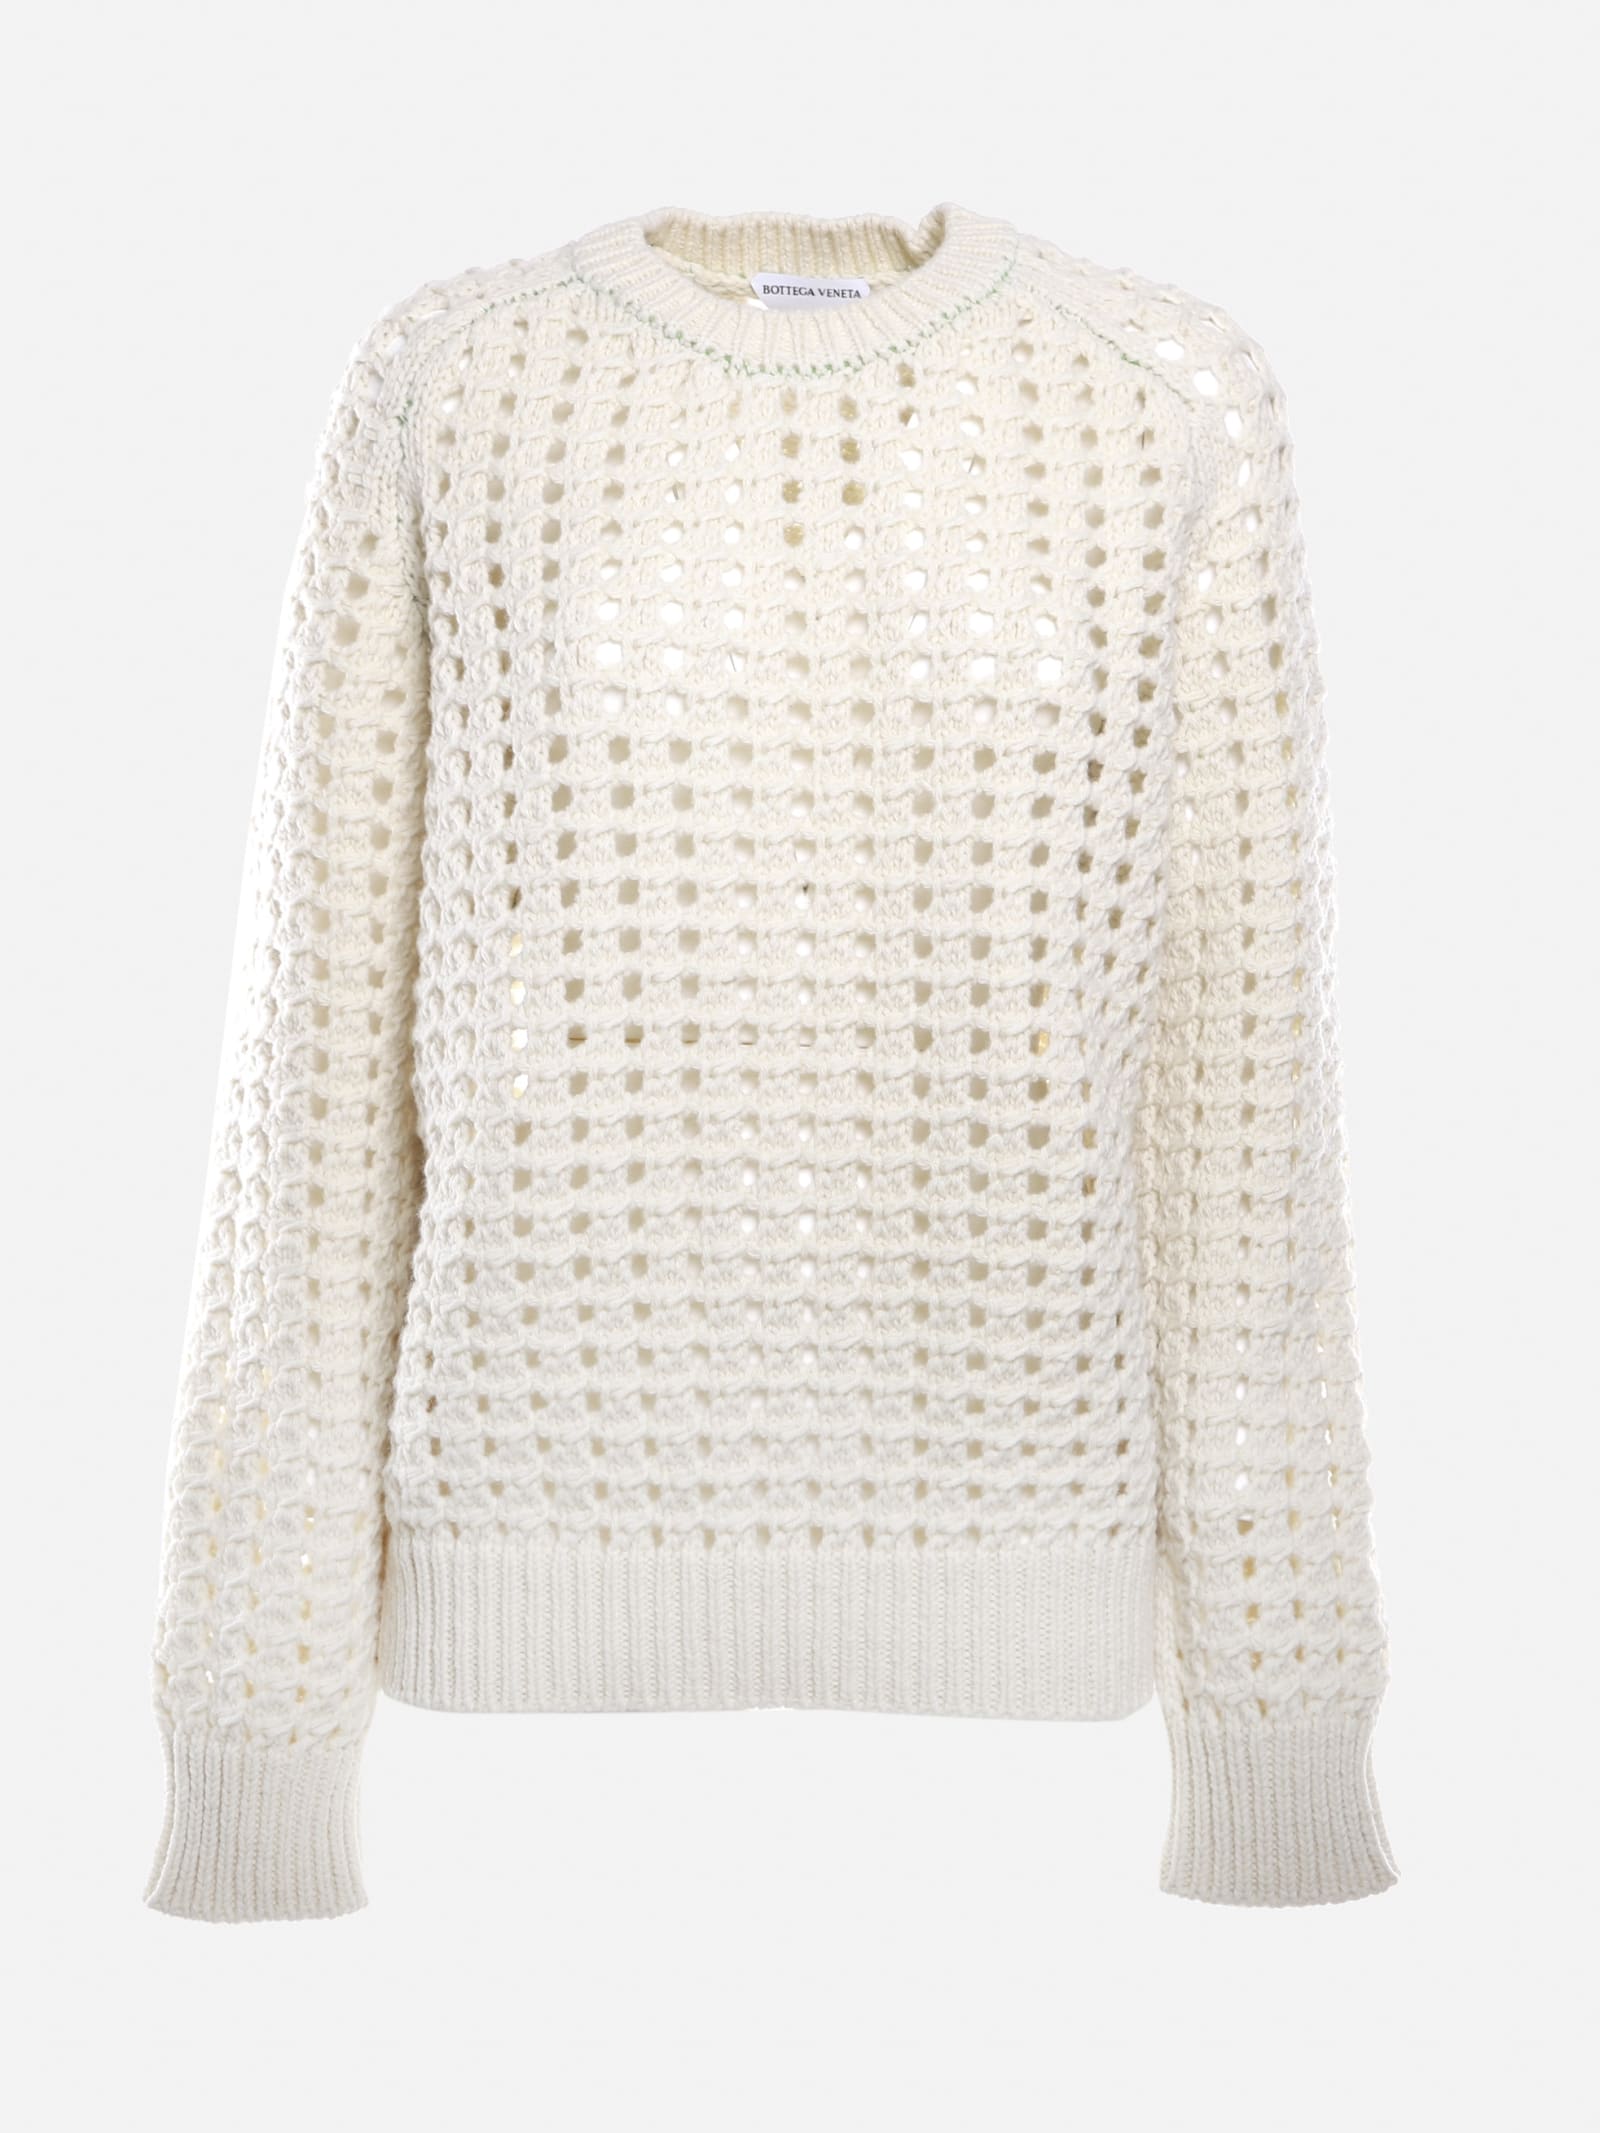 Bottega Veneta Wool Sweater With Perforated Details